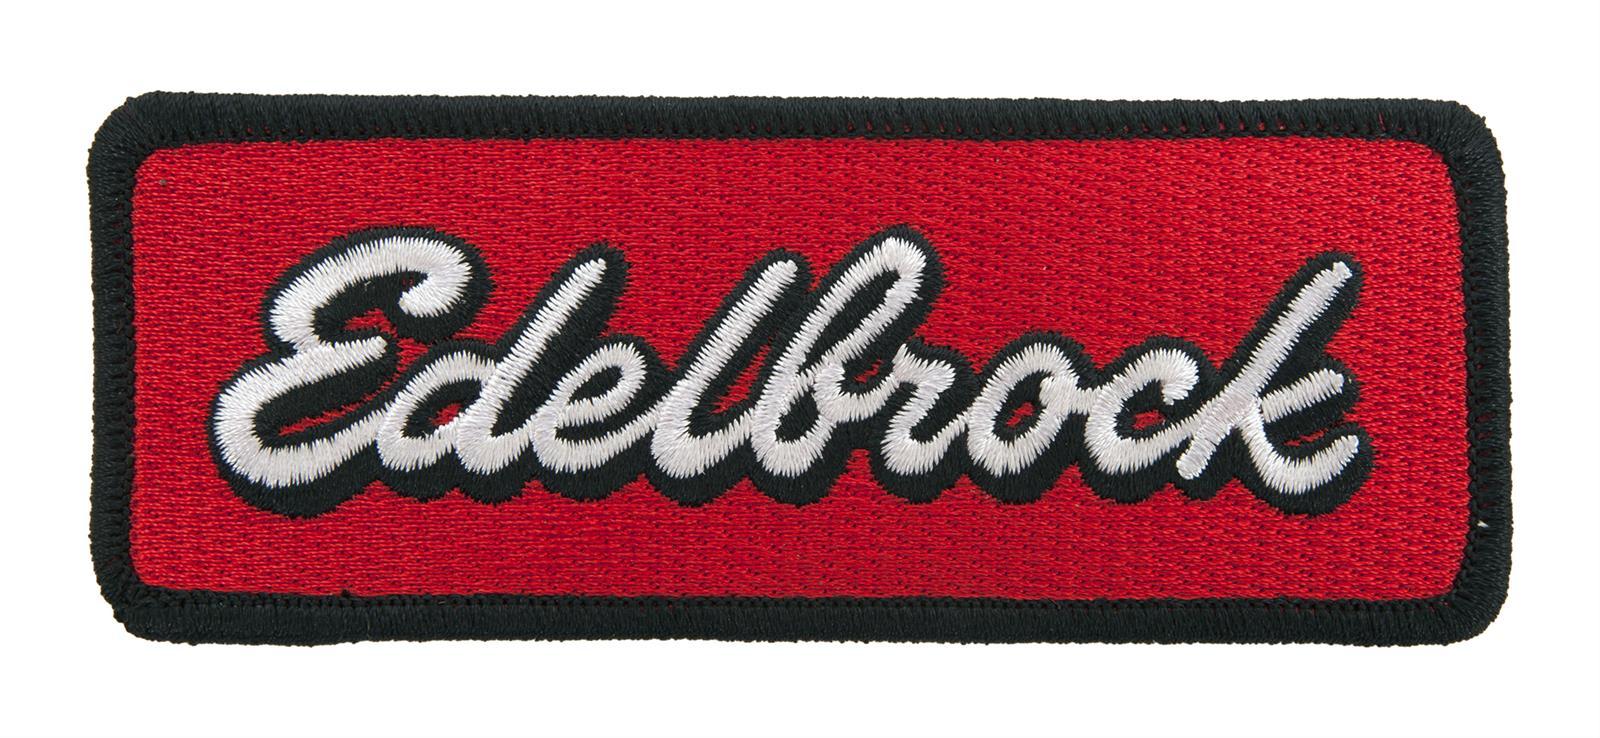 Edelbrock Logo - Edelbrock Patches 2348